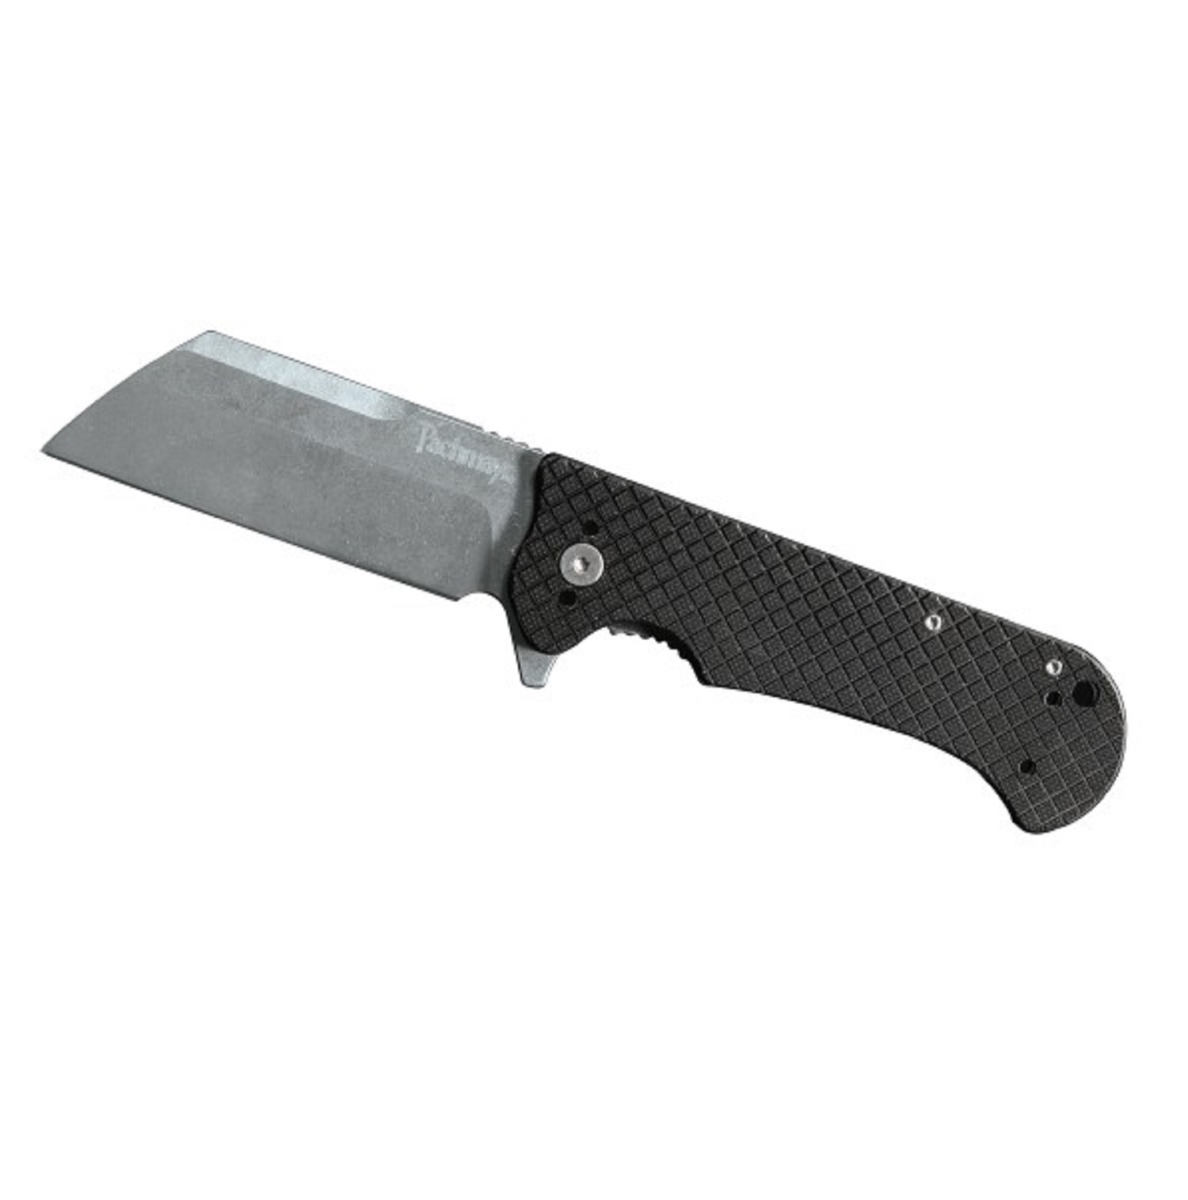 4019401 3.3 In. Grunt Folder Knife Blade With G-10 Handle, Black